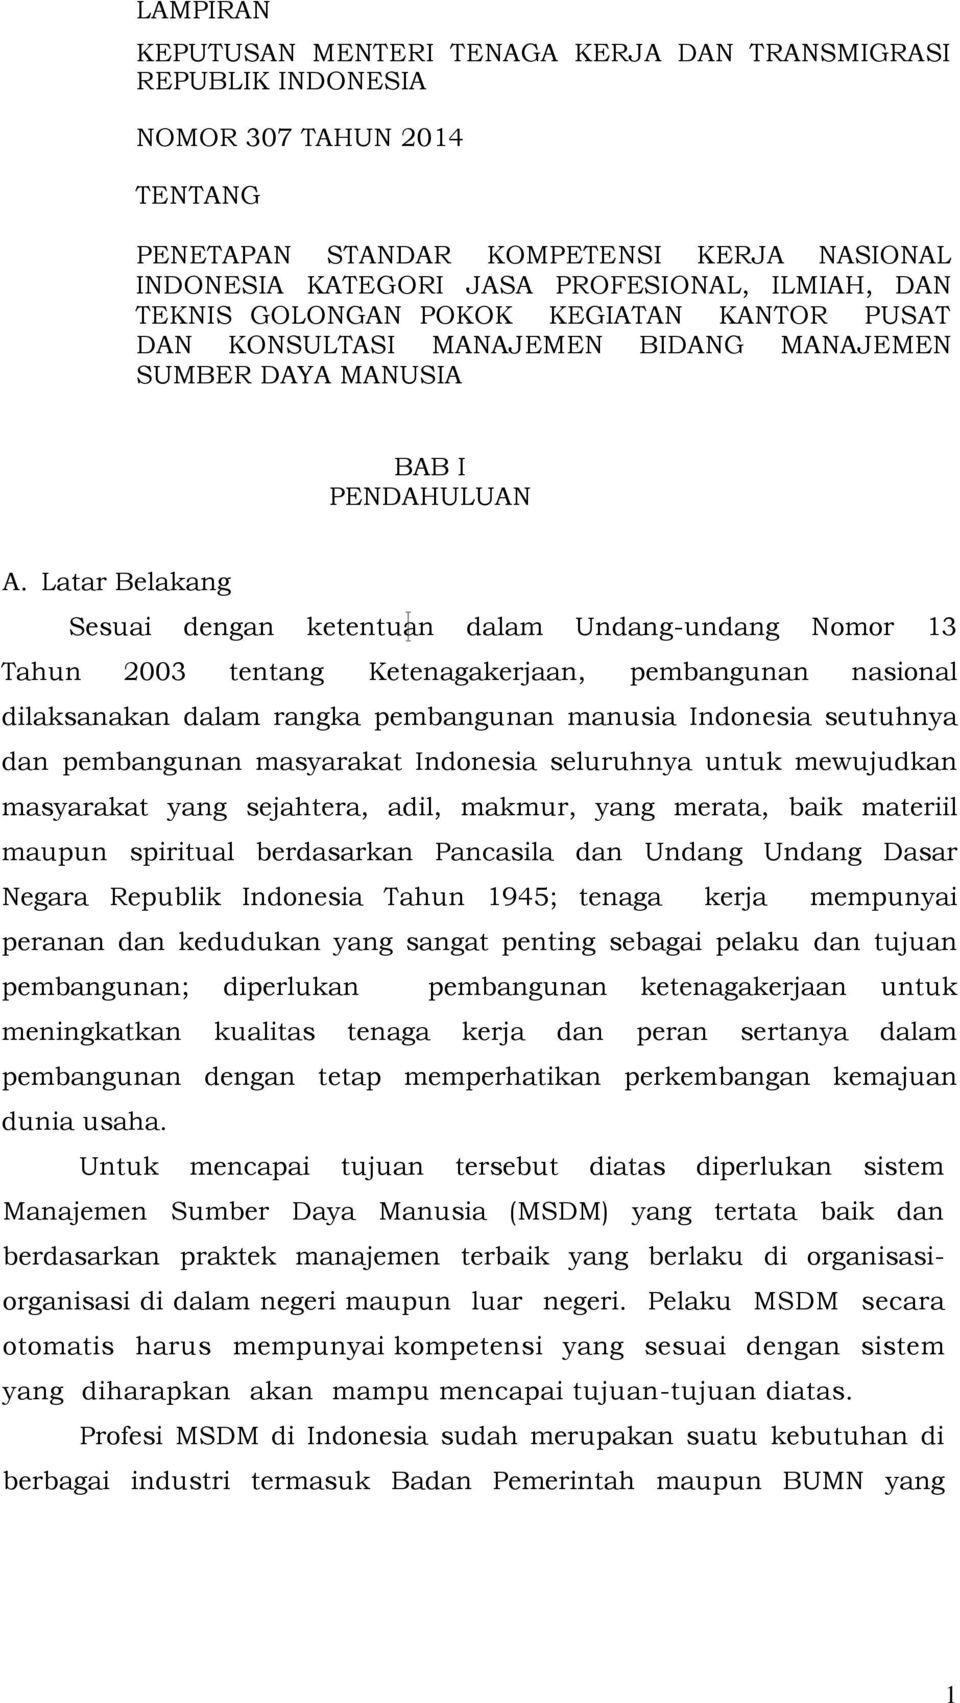 Latar Belakang Sesuai dengan ketentuan dalam Undang-undang Nomor 13 Tahun 2003 tentang Ketenagakerjaan, pembangunan nasional dilaksanakan dalam rangka pembangunan manusia Indonesia seutuhnya dan